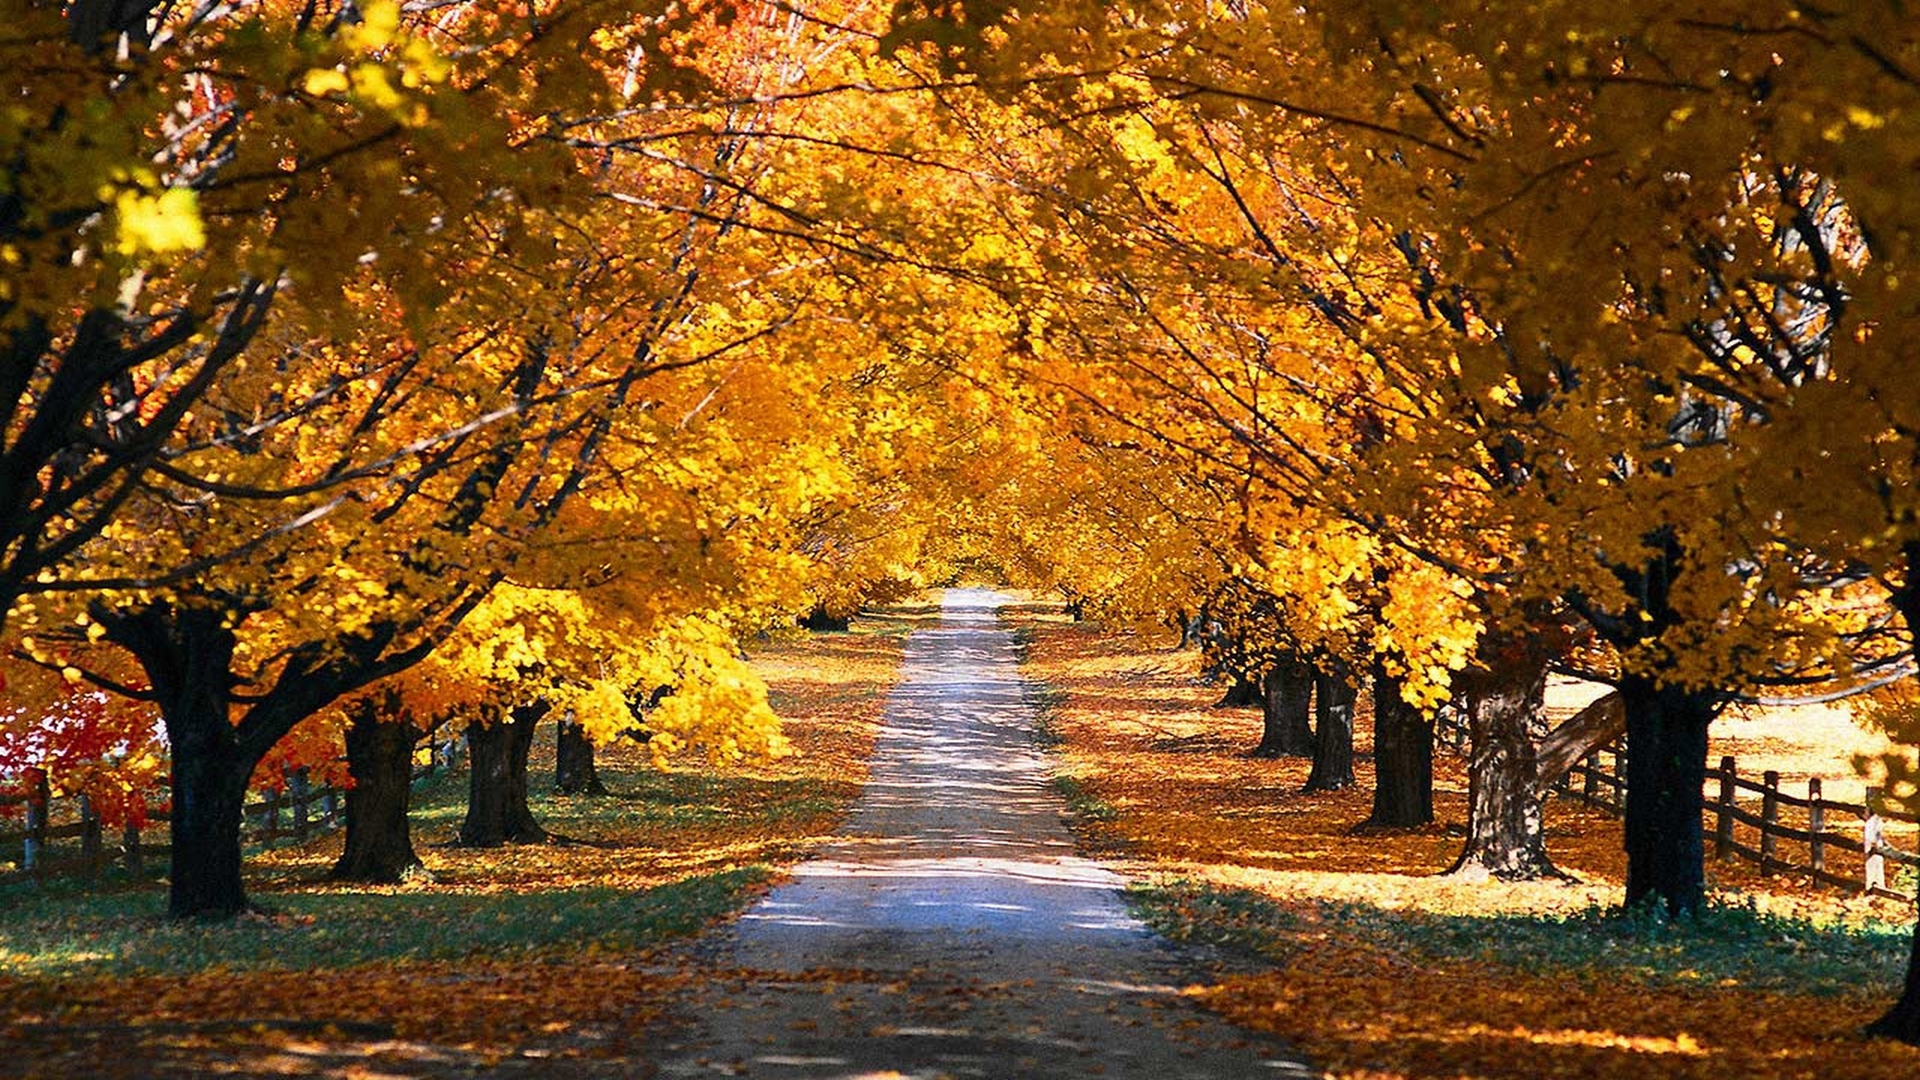 Autumn Road 1080p Wallpaper HD 1920x1080 5757